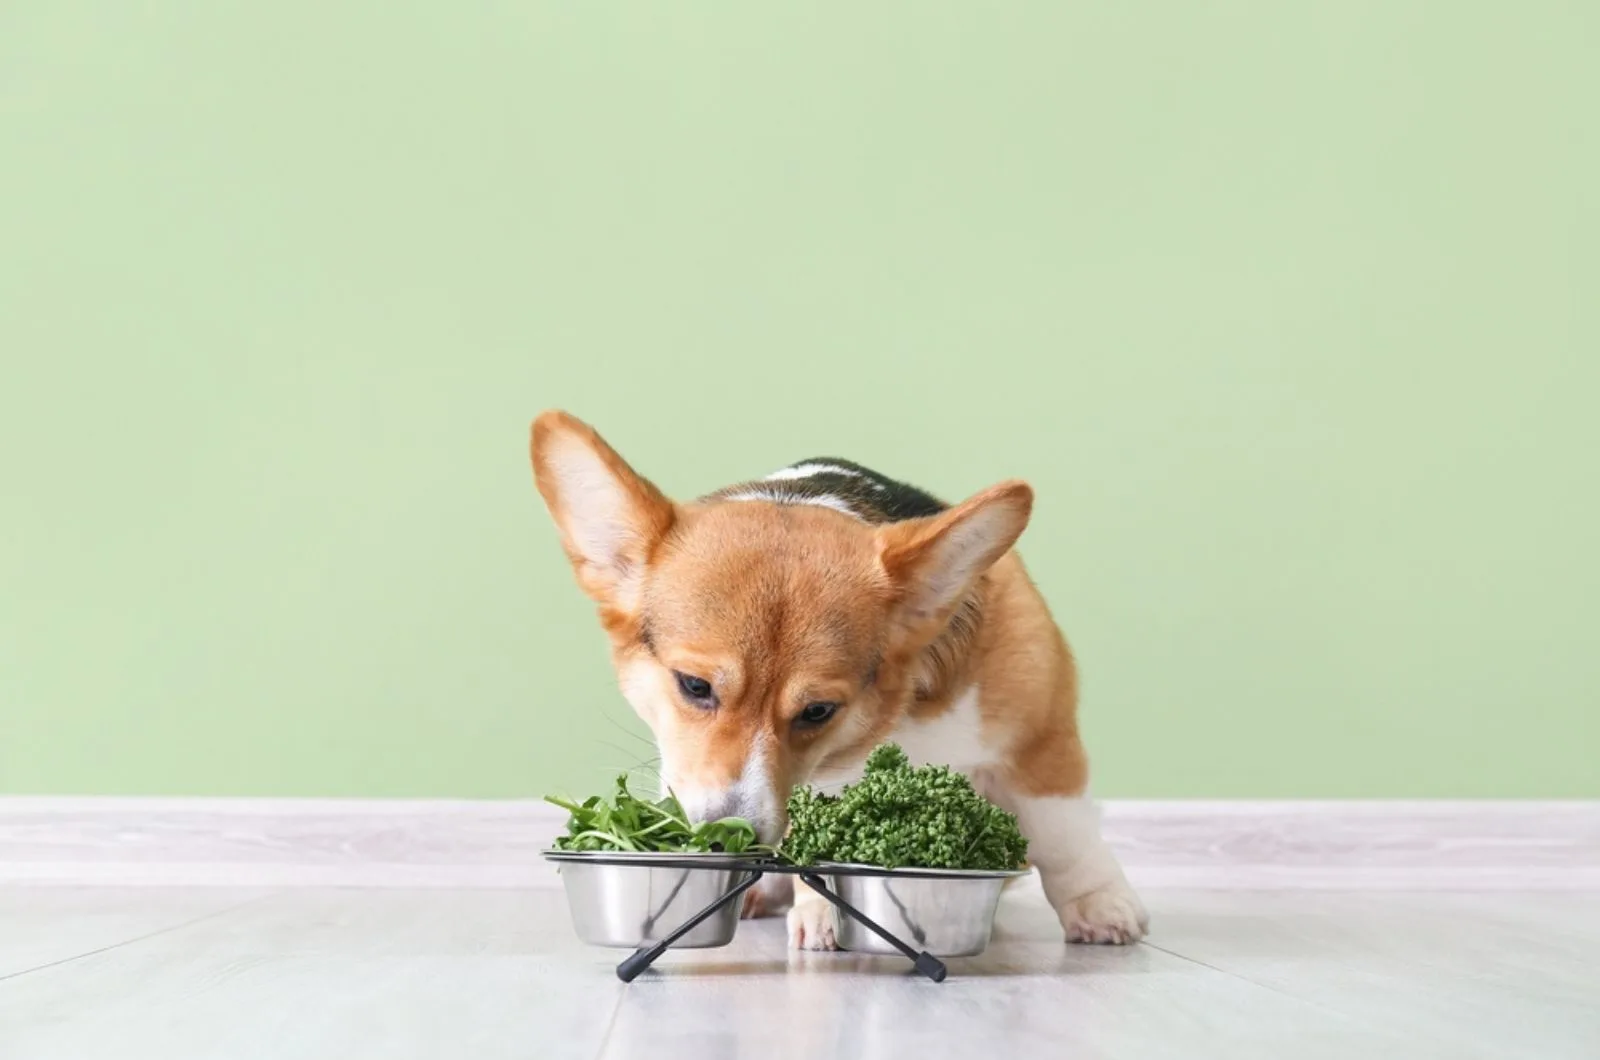 corgi dog eating herbs and vegetables